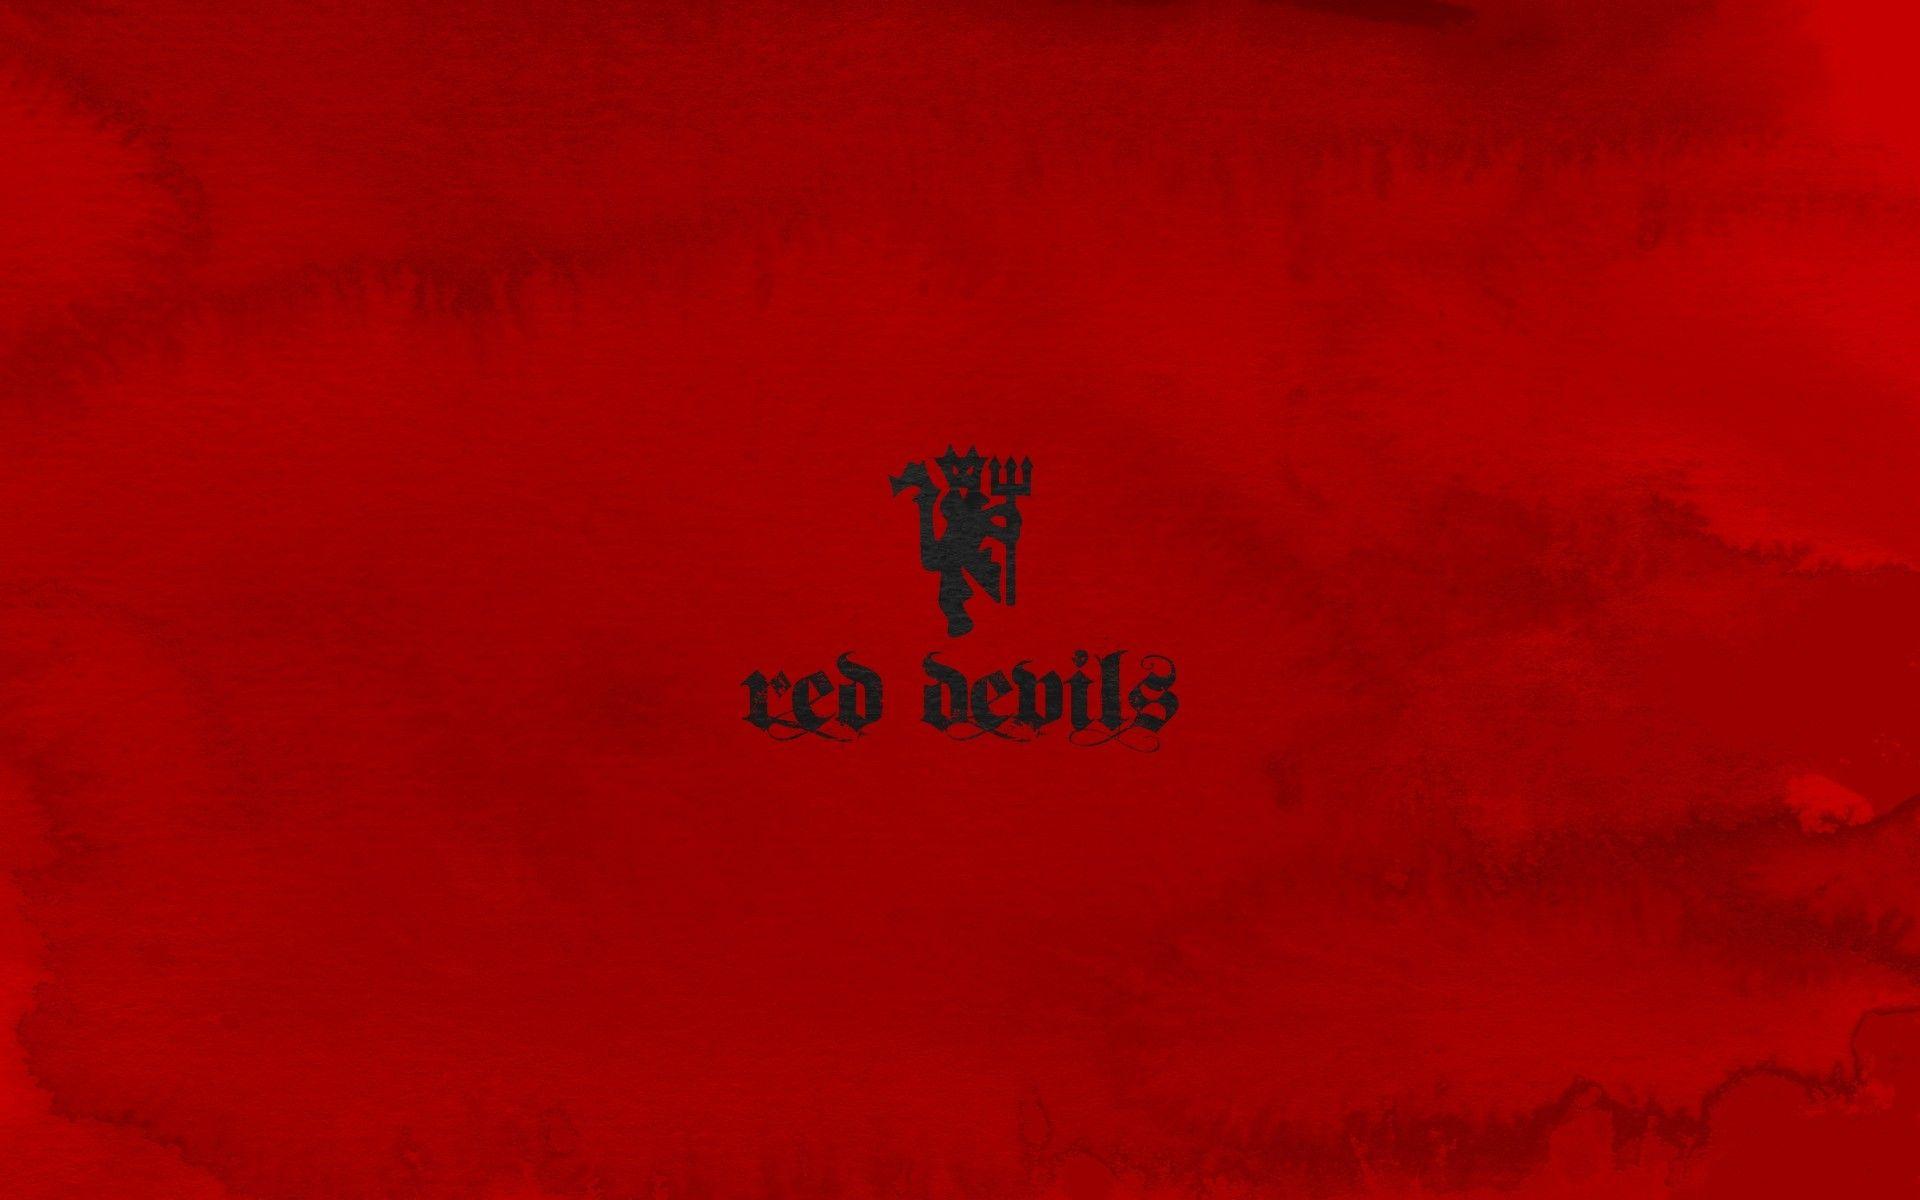 Belgian Red Devils wallpapers